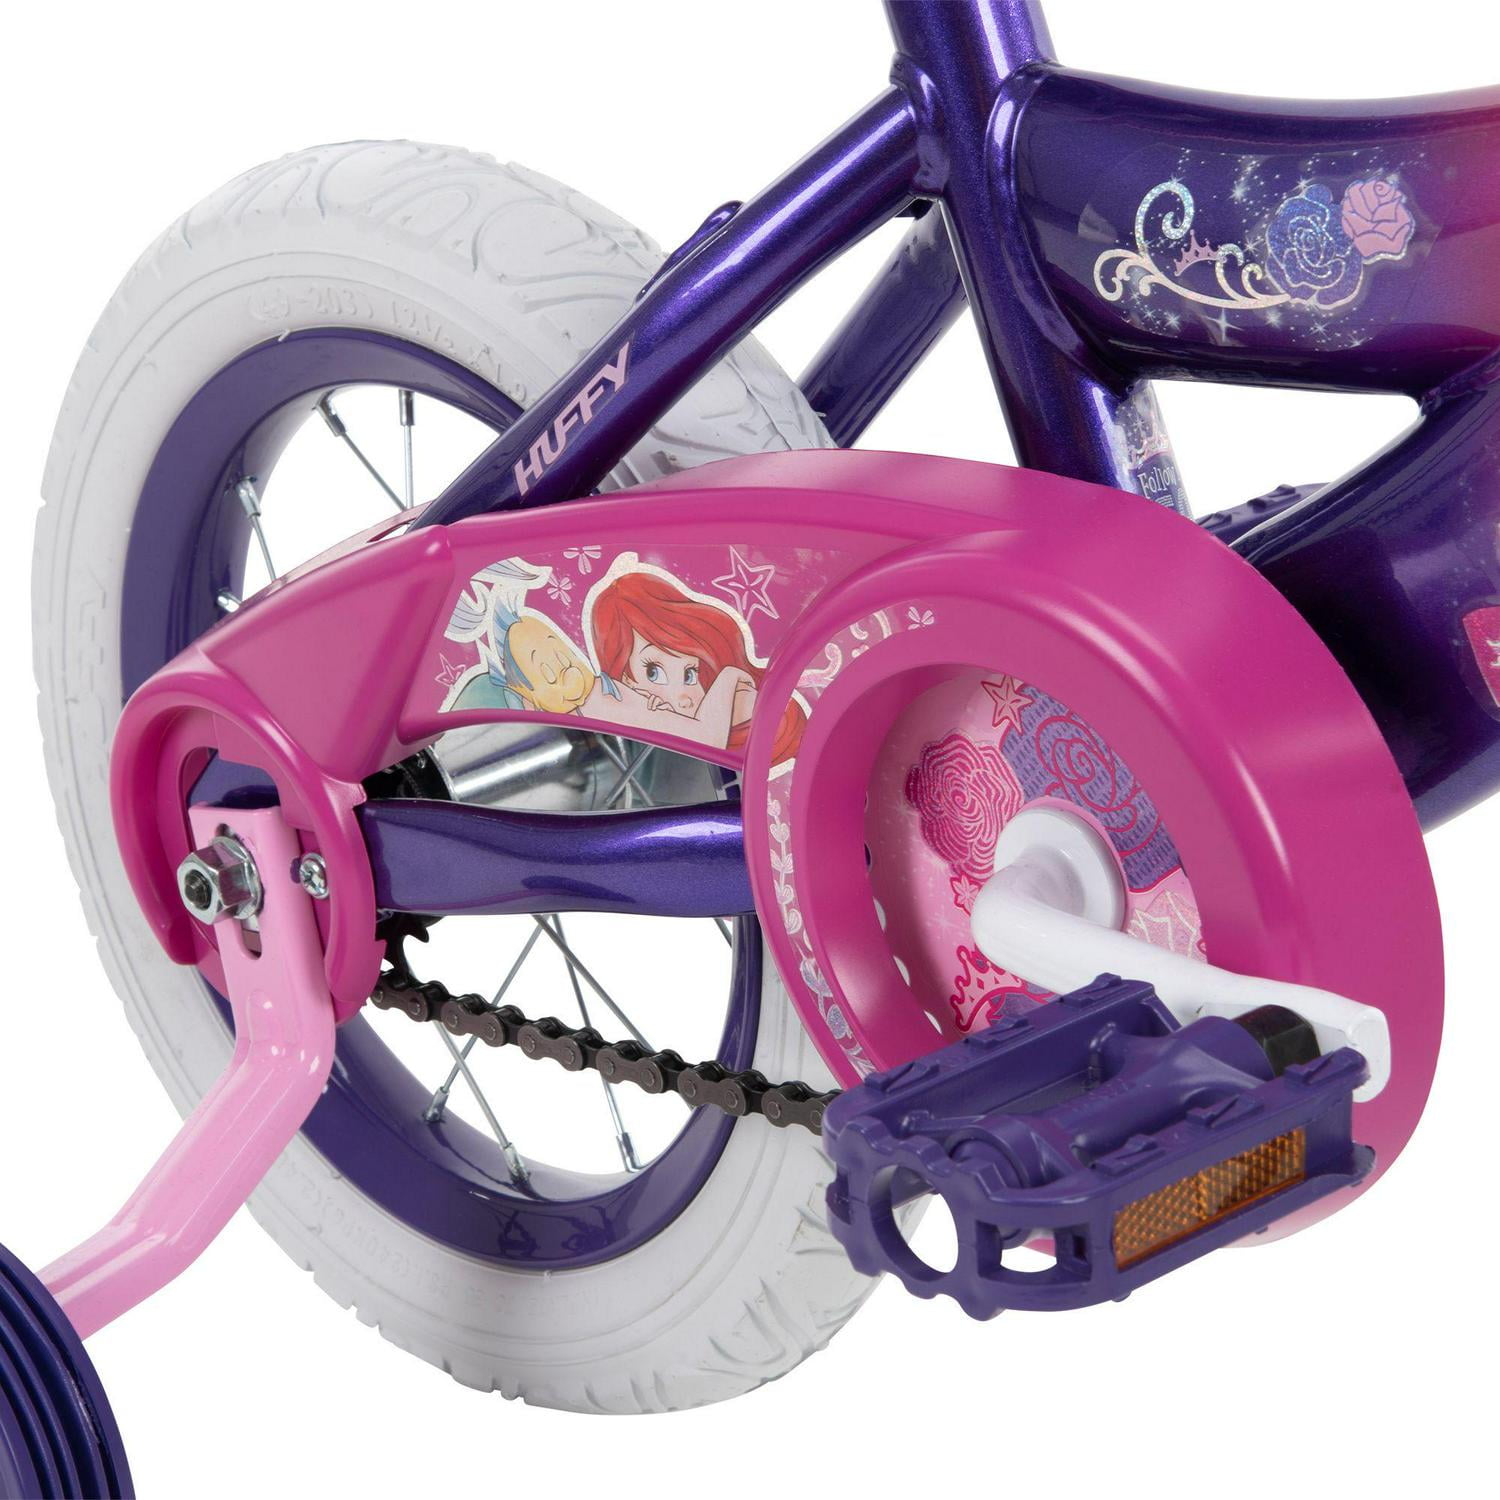 Huffy Girls\' 12 Speed, Pink/Indigo Hot with 1 Bubble-Maker, in. Bike Princess Disney